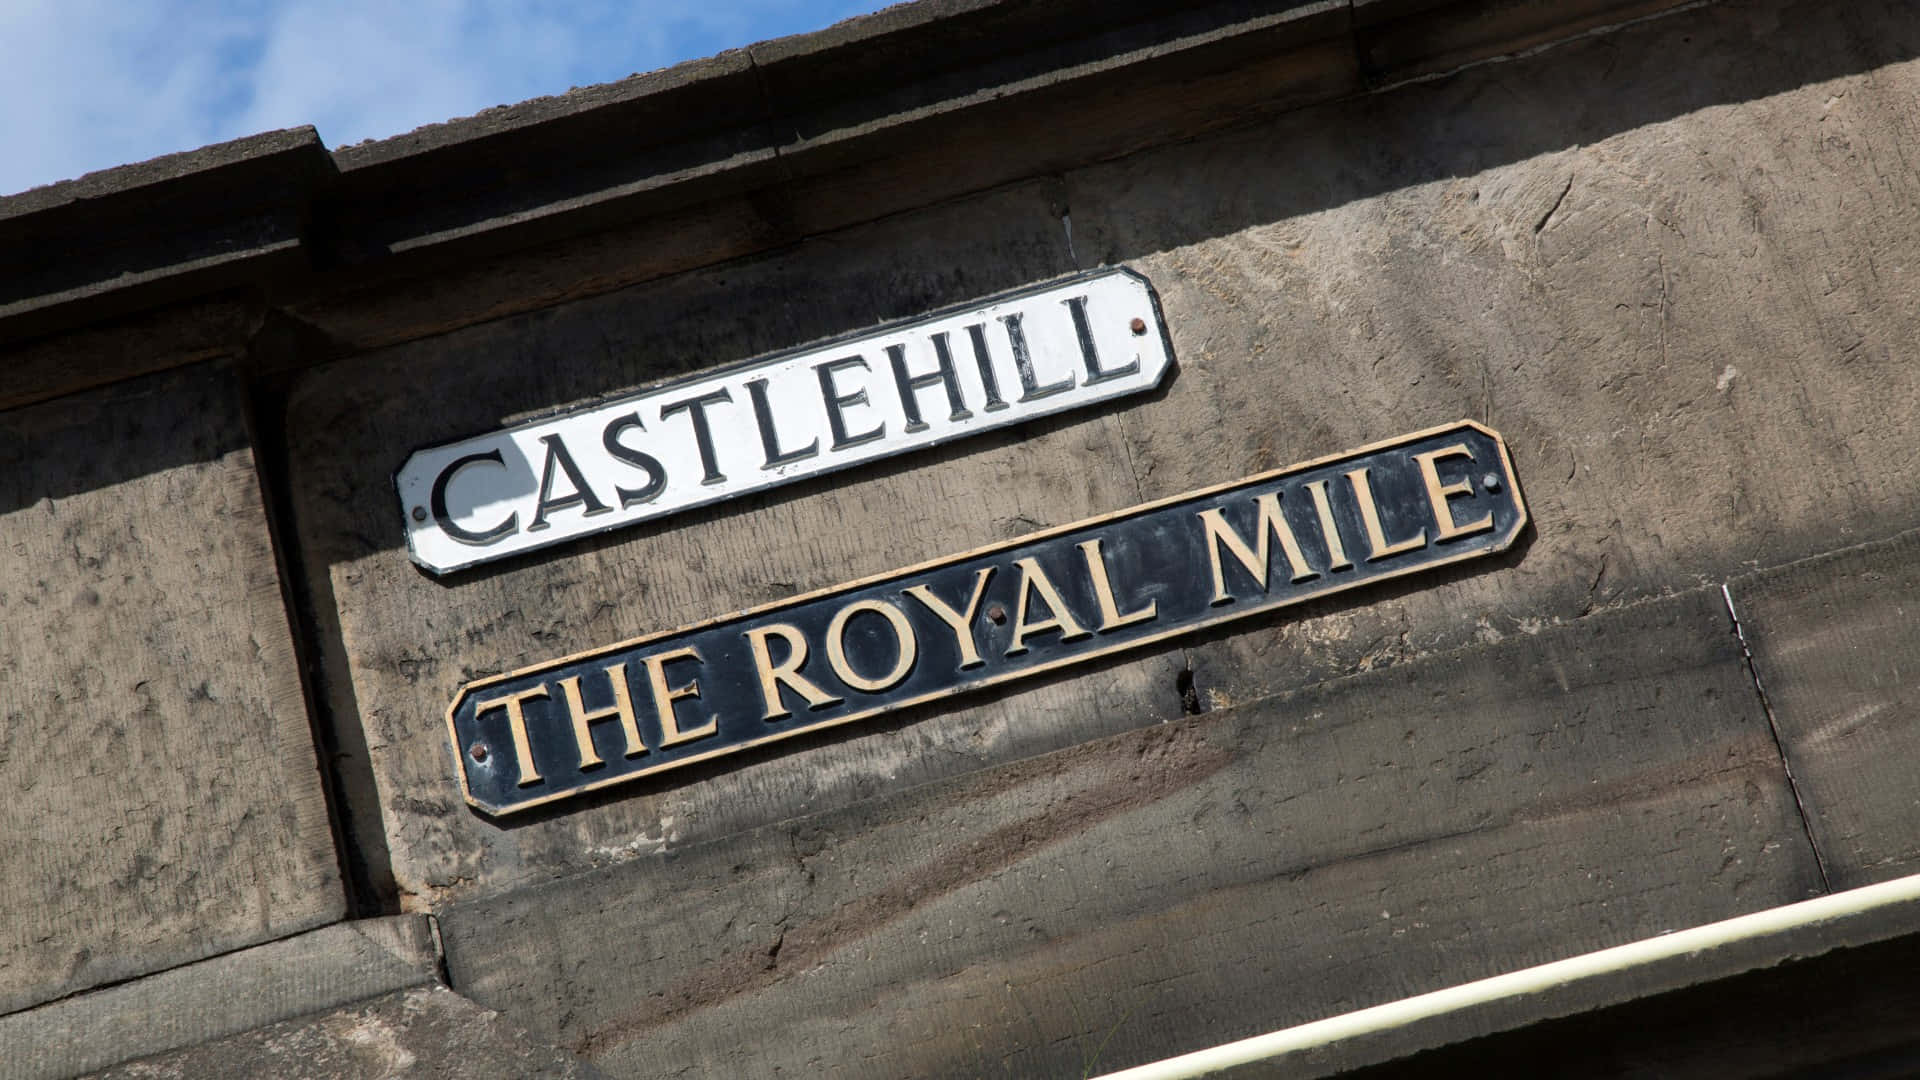 Royal Mile Castlehill Signage Wallpaper